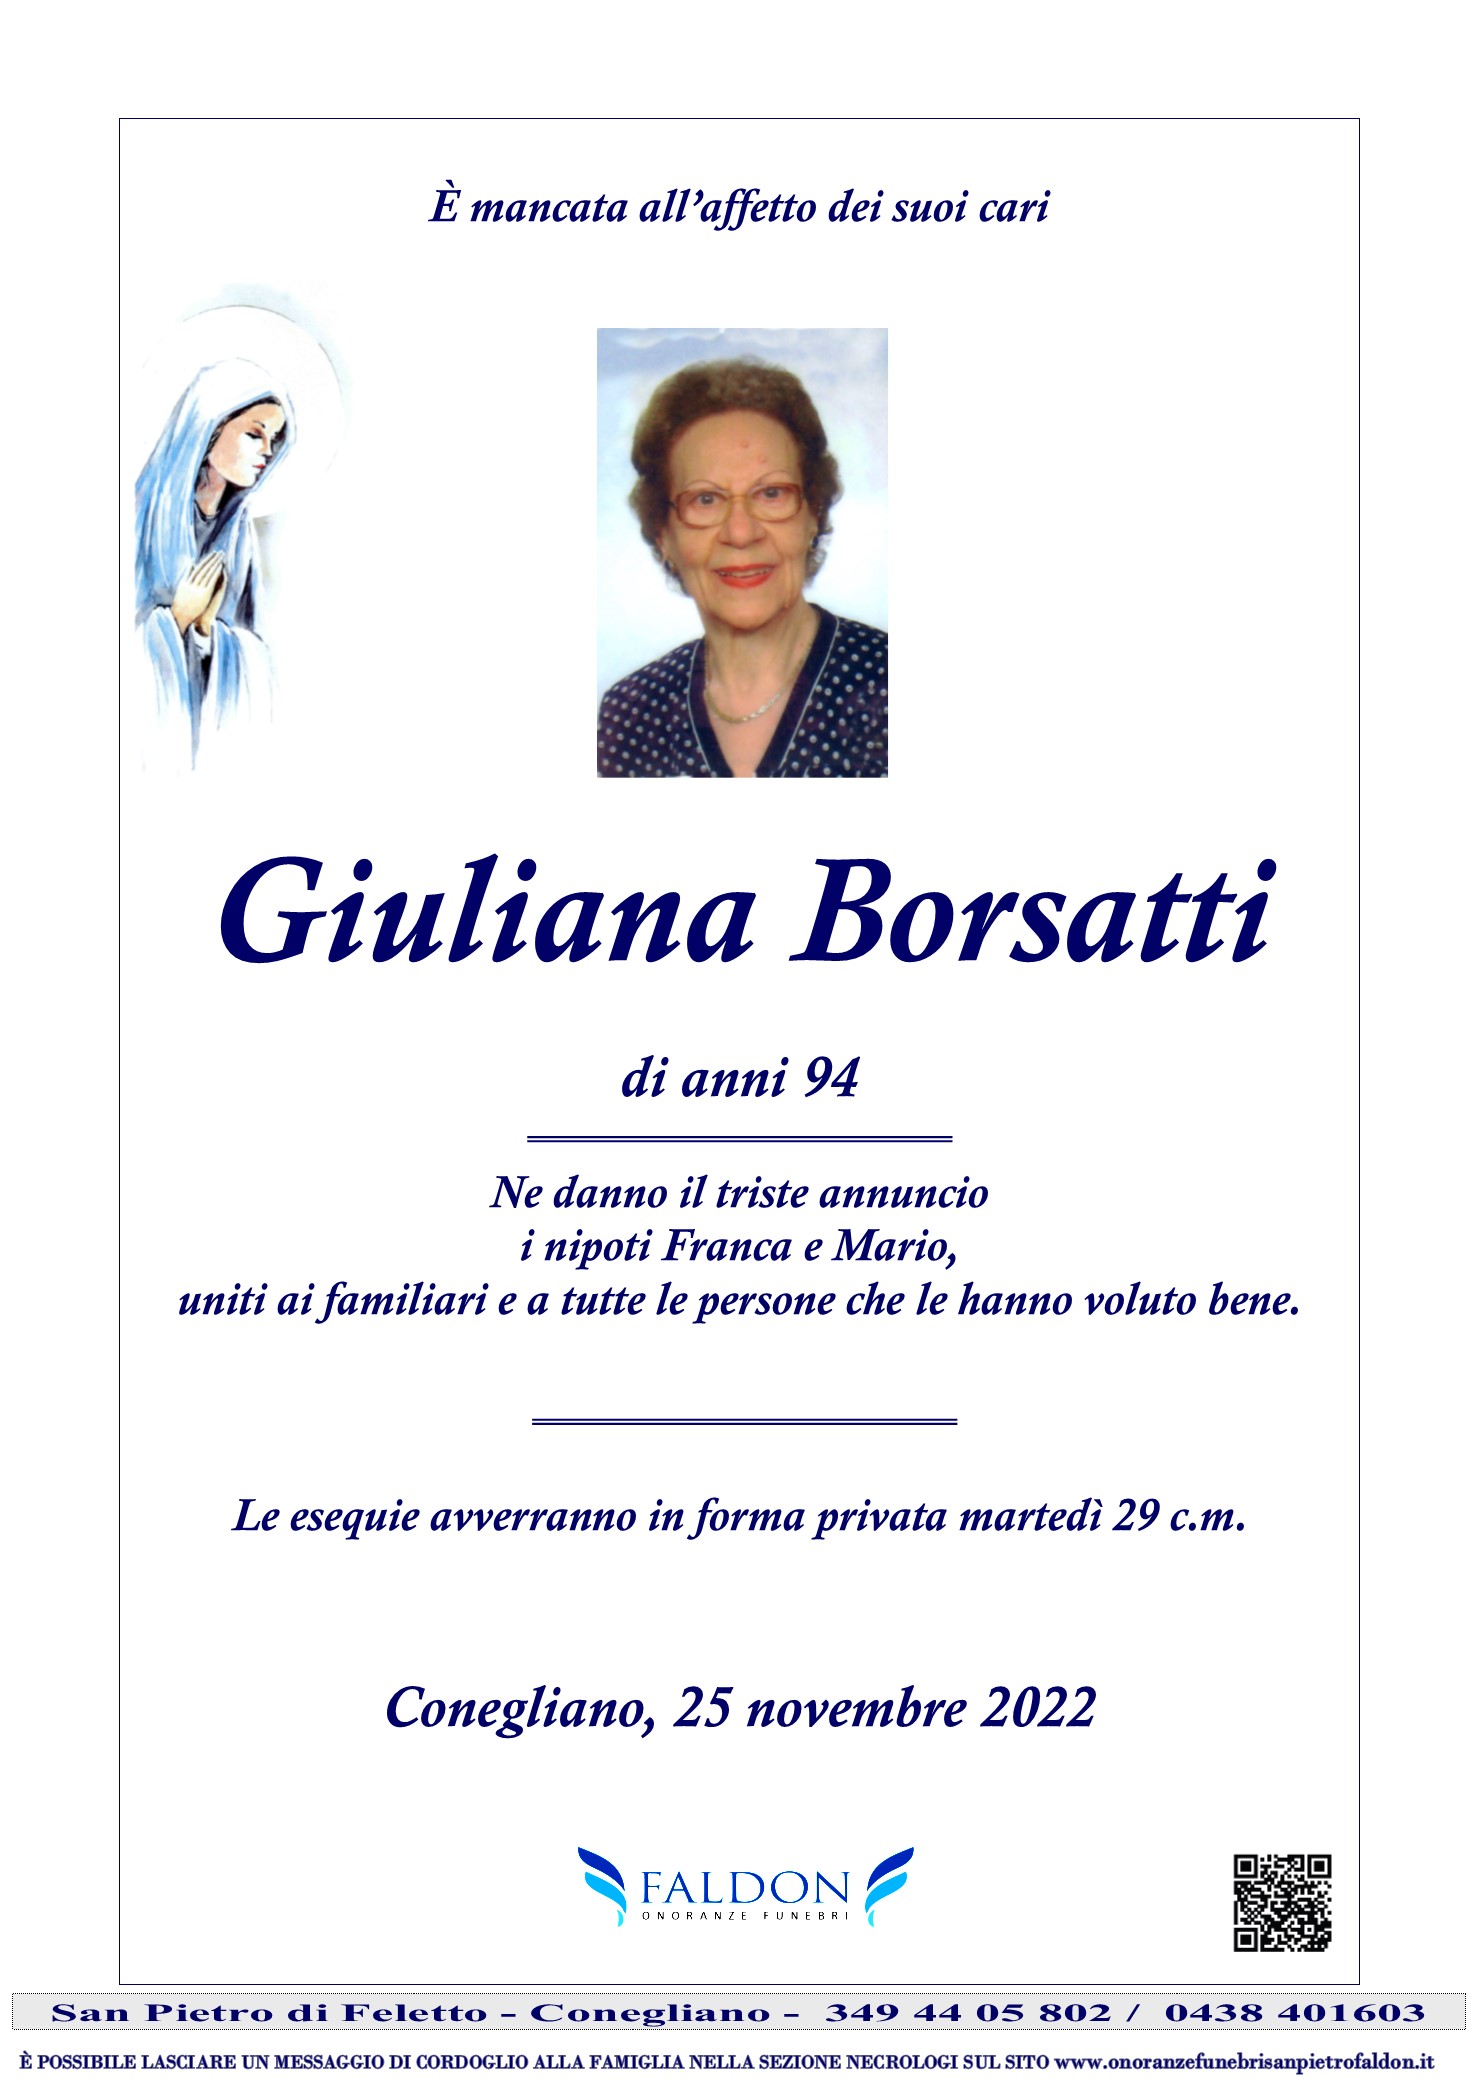 Giuliana Borsatti